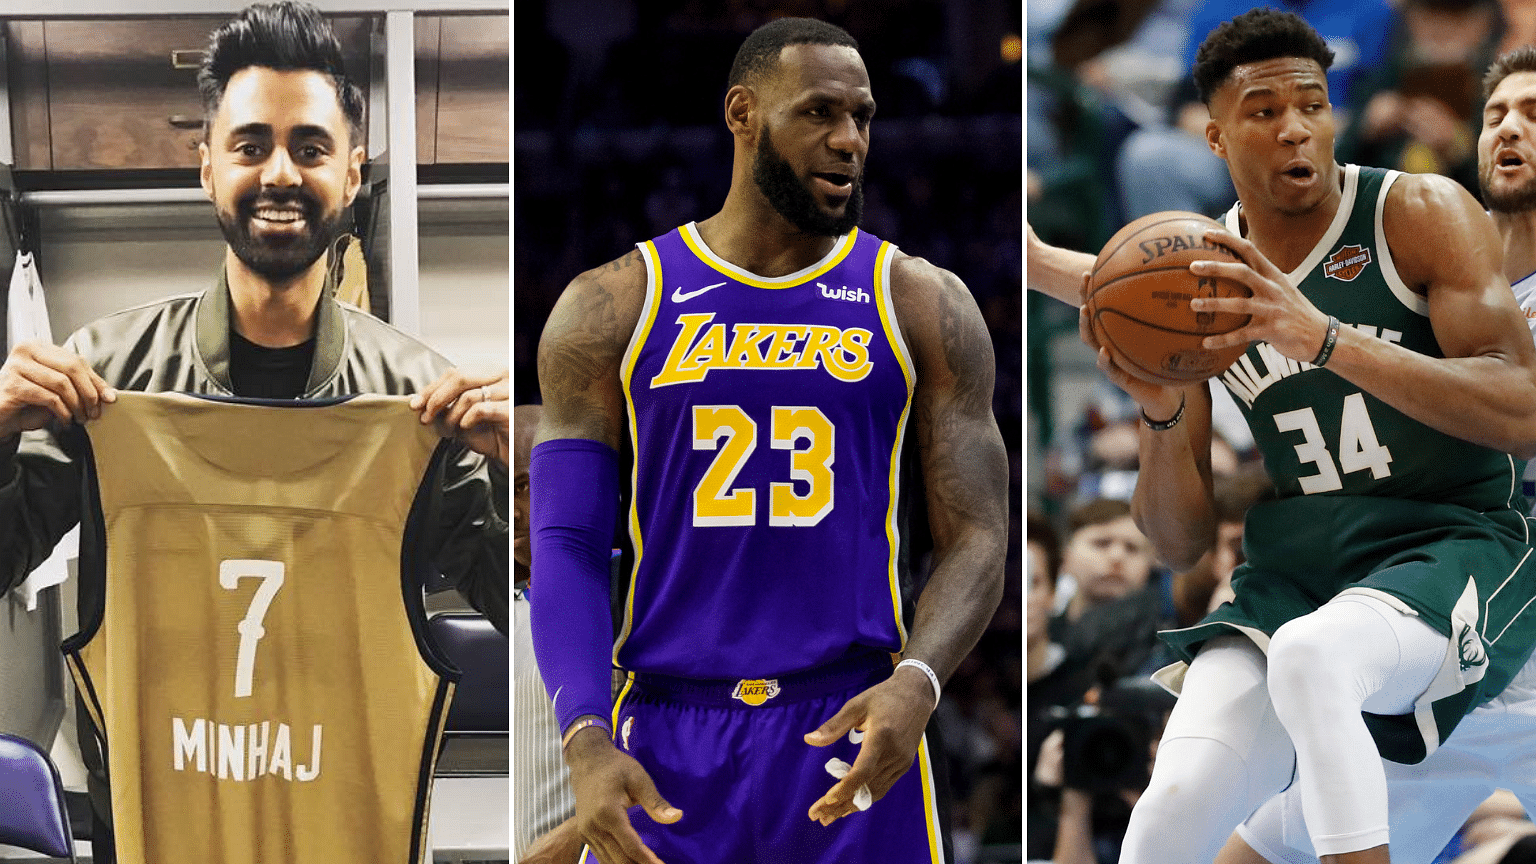 The 2019 NBA All-Star Weekend will feature Hasan Minhaj, LeBron James and Giannis Antetokounmpo.